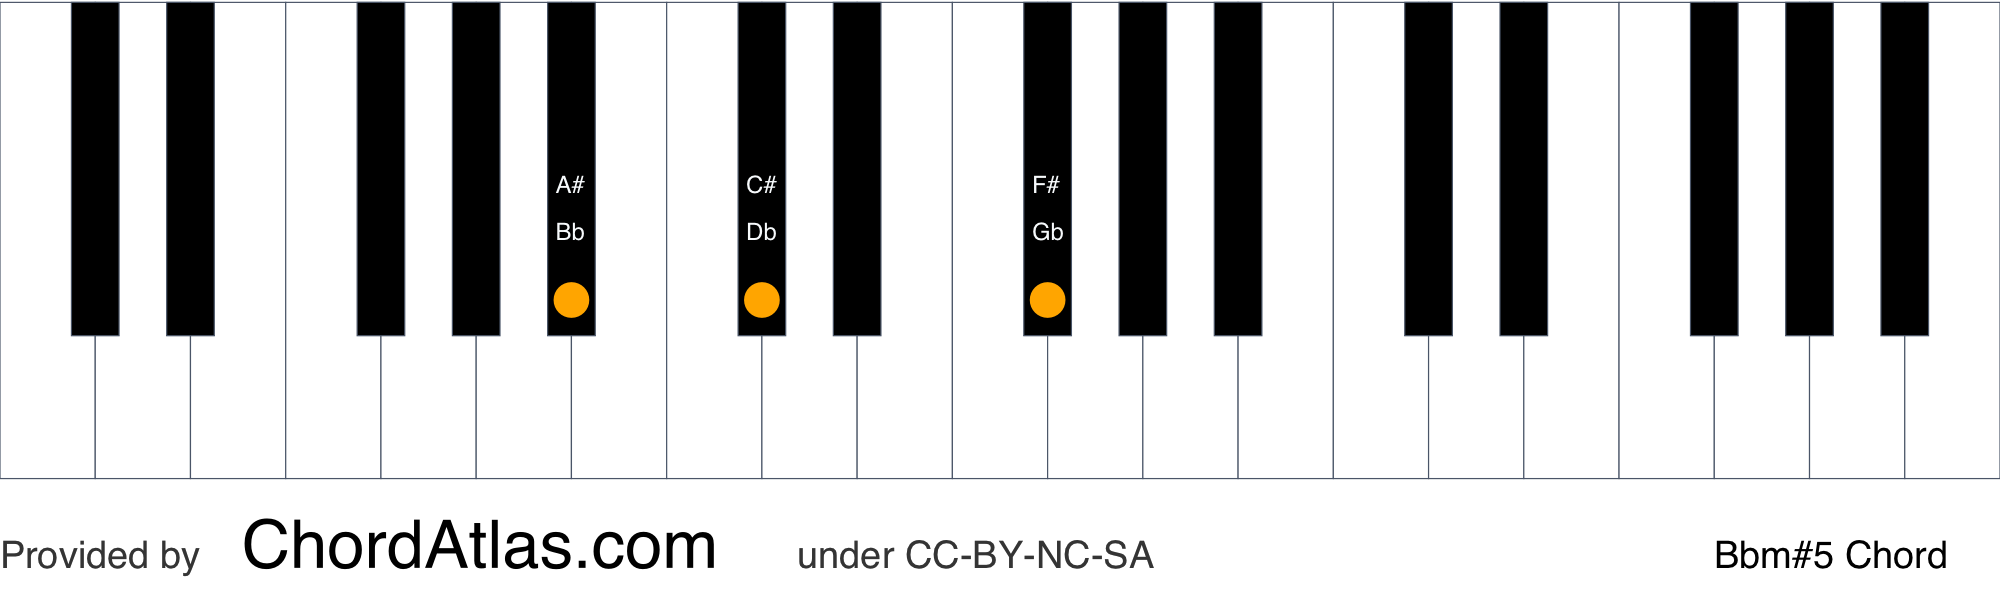 b-flat melodic minor